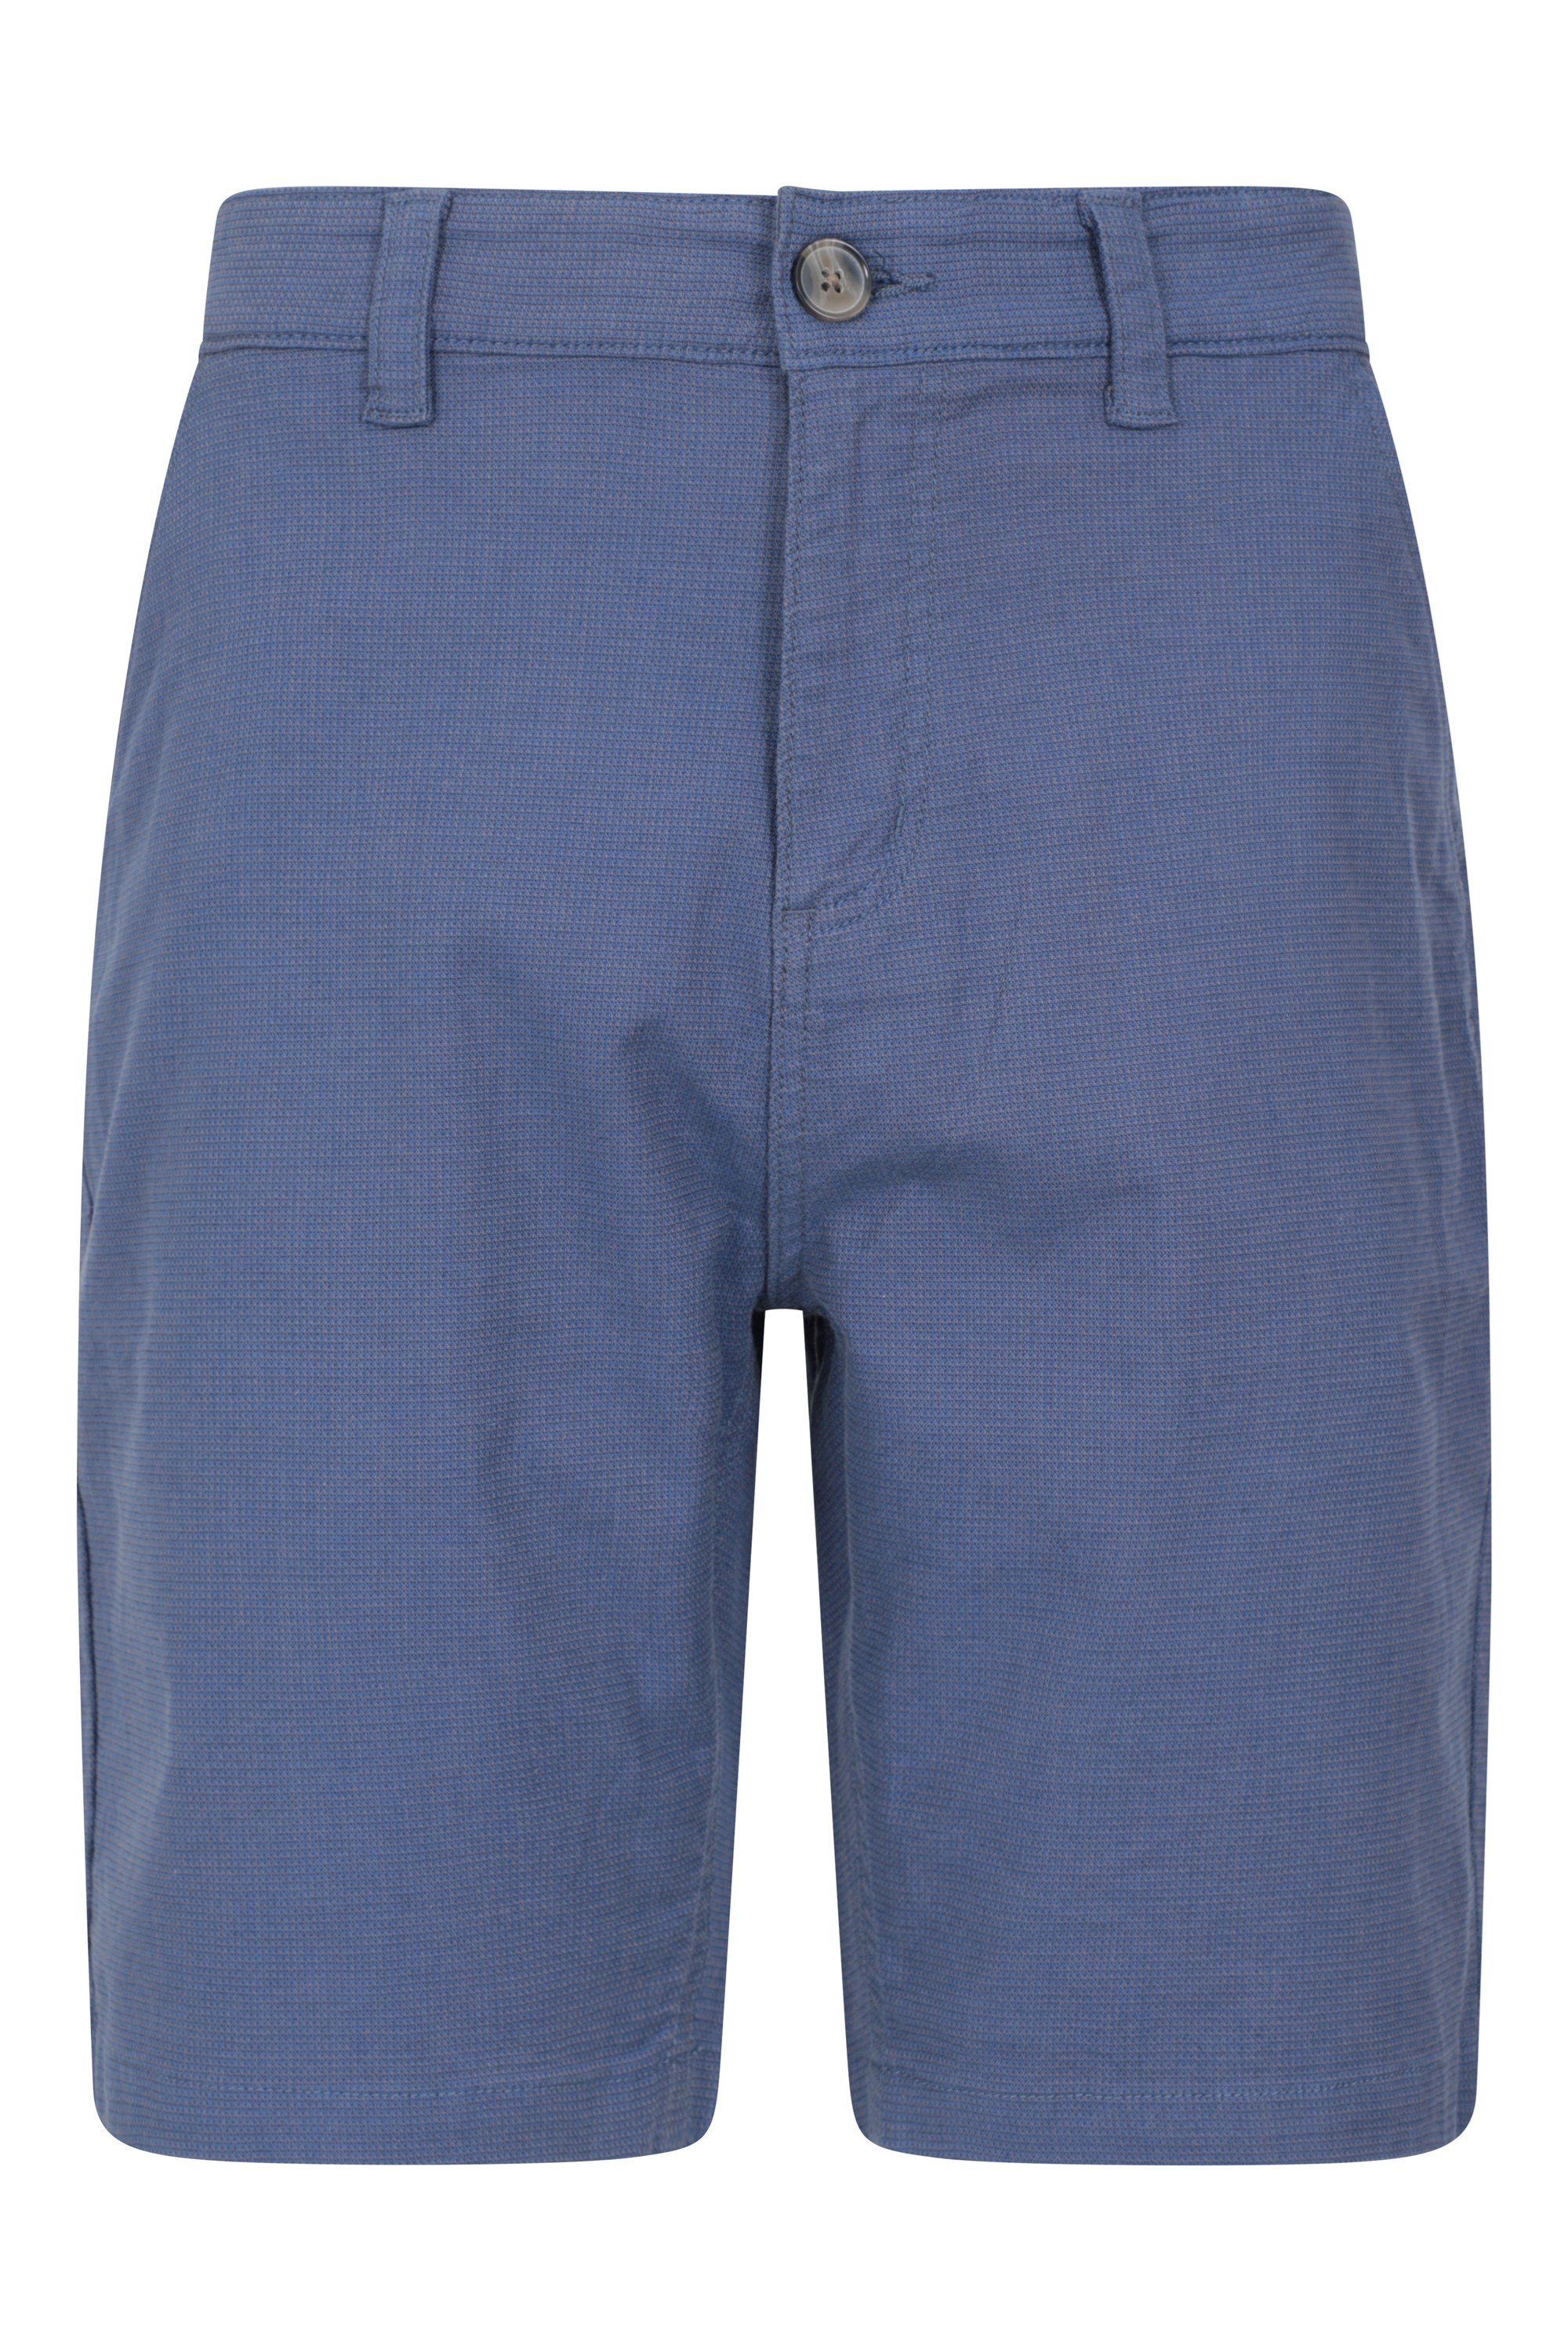 Grove Textured Dobby Shorts - Blue